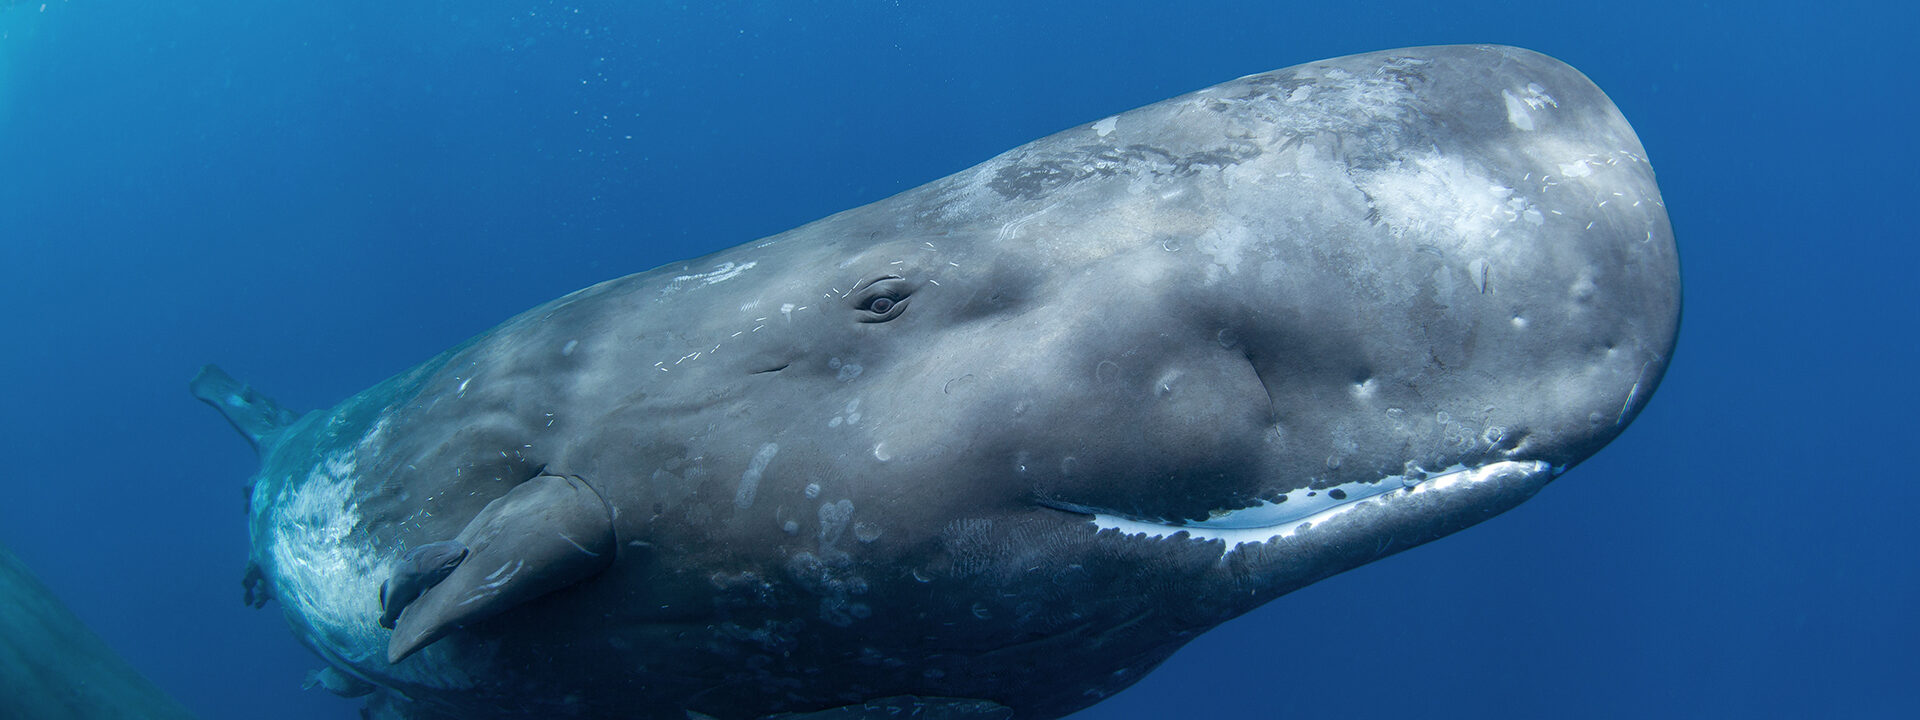 Whale under water